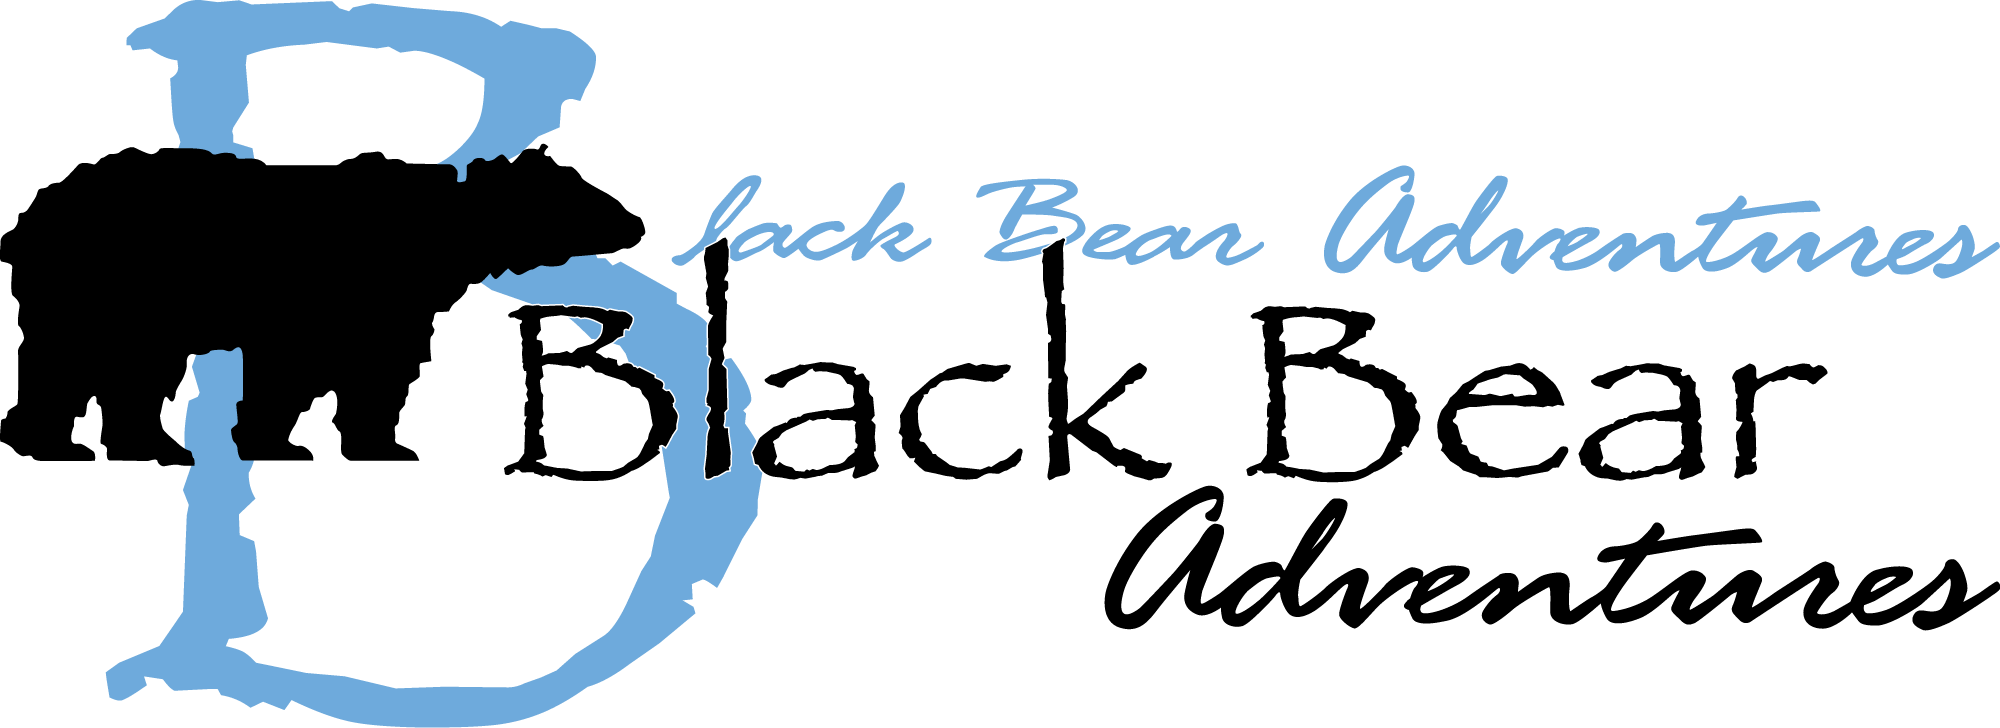 Black Bear Adventures - Bear Mountain Bike Tour (2000x728)